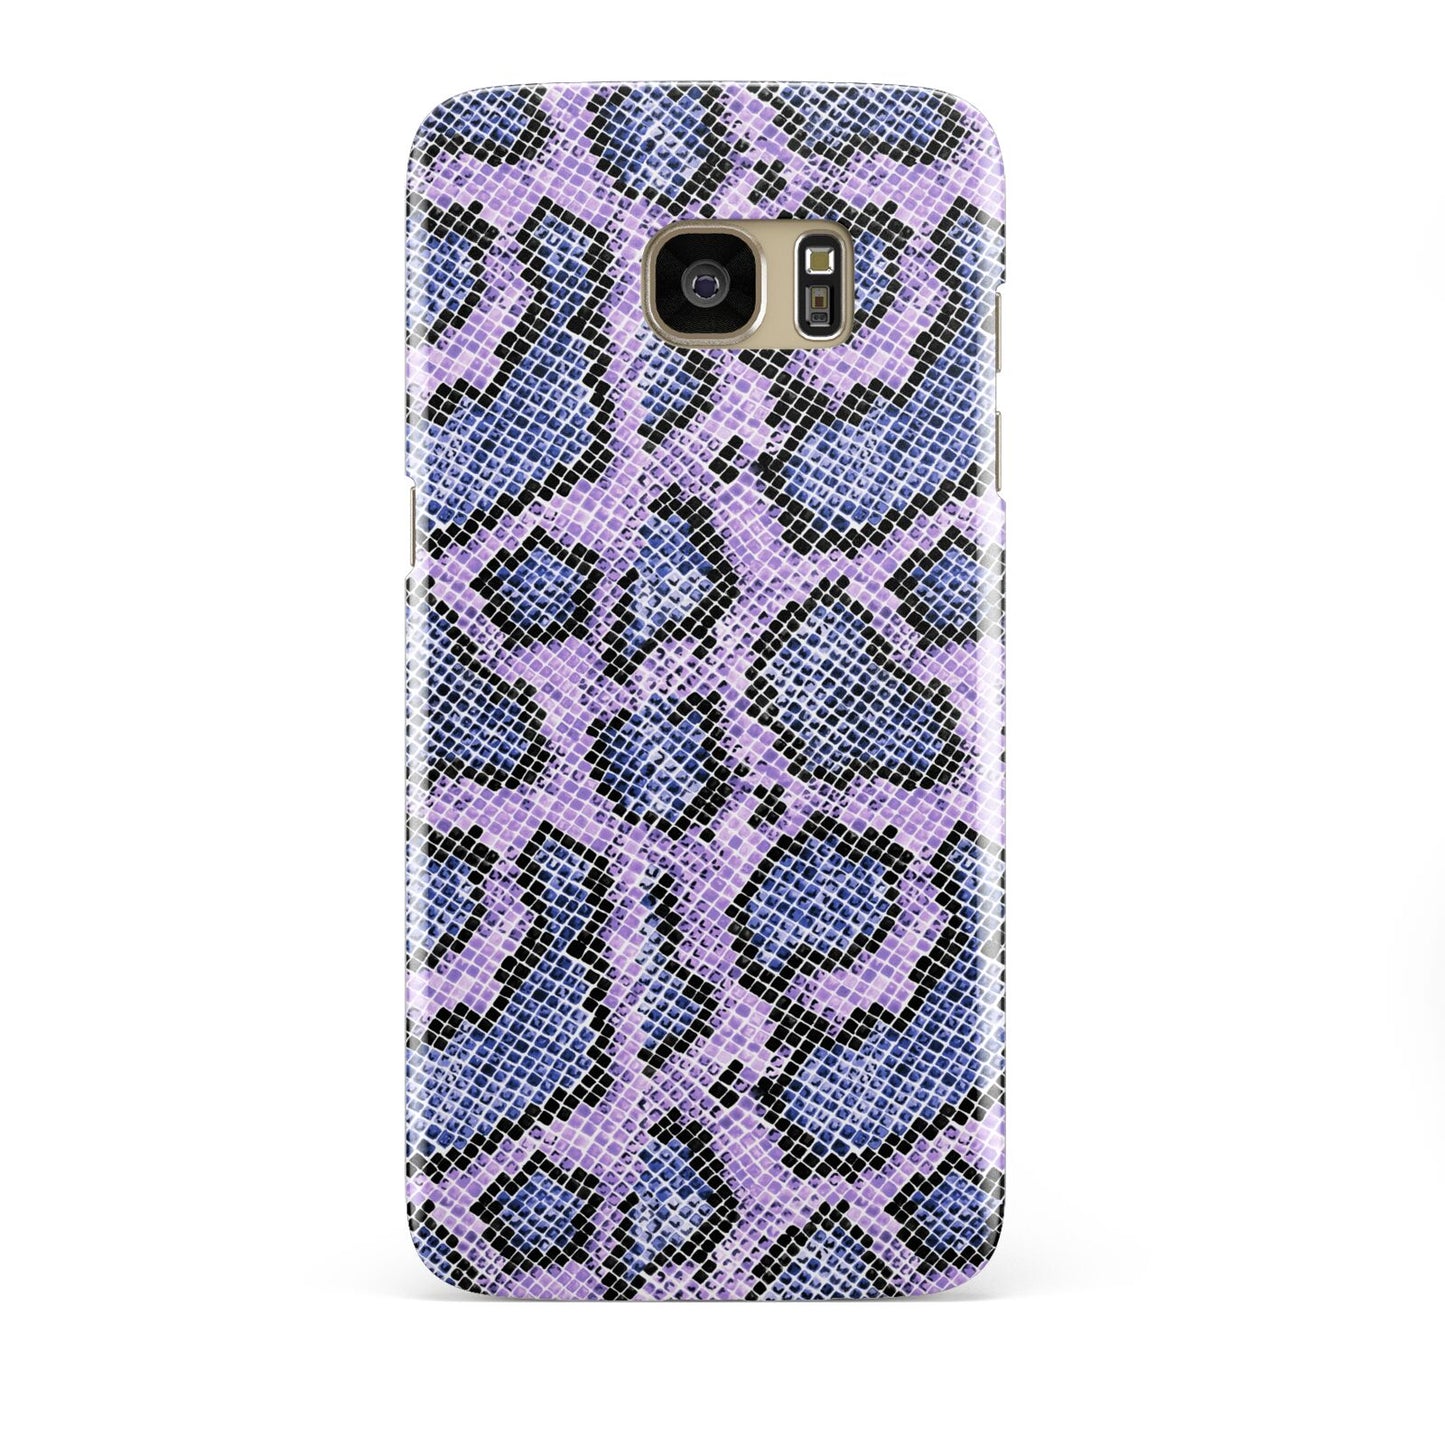 Purple And Blue Snakeskin Samsung Galaxy S7 Edge Case